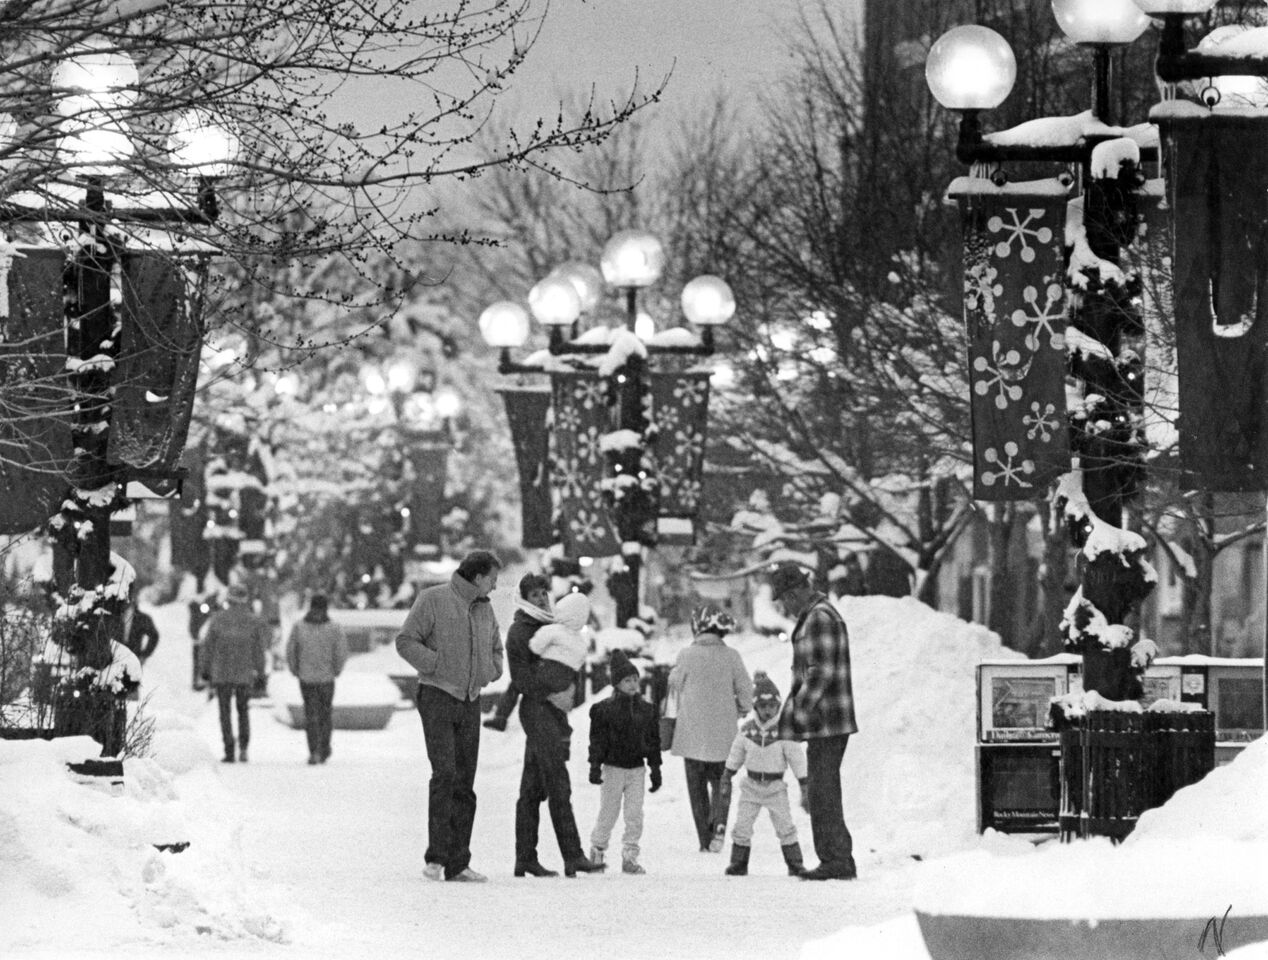 People enjoying a snowy street